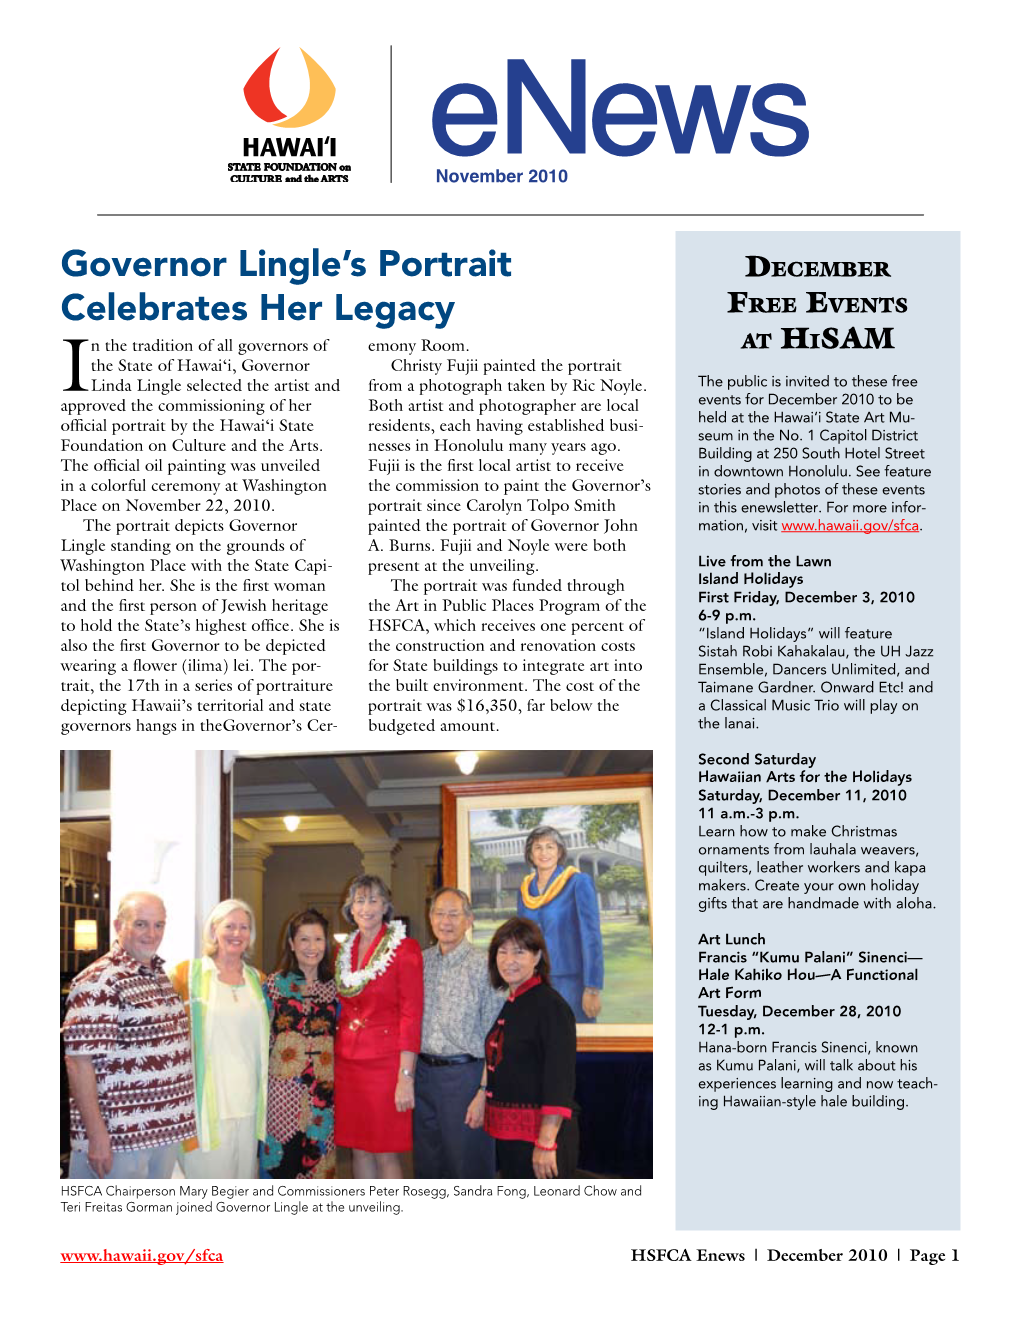 Governor Lingle's Portrait Celebrates Her Legacy